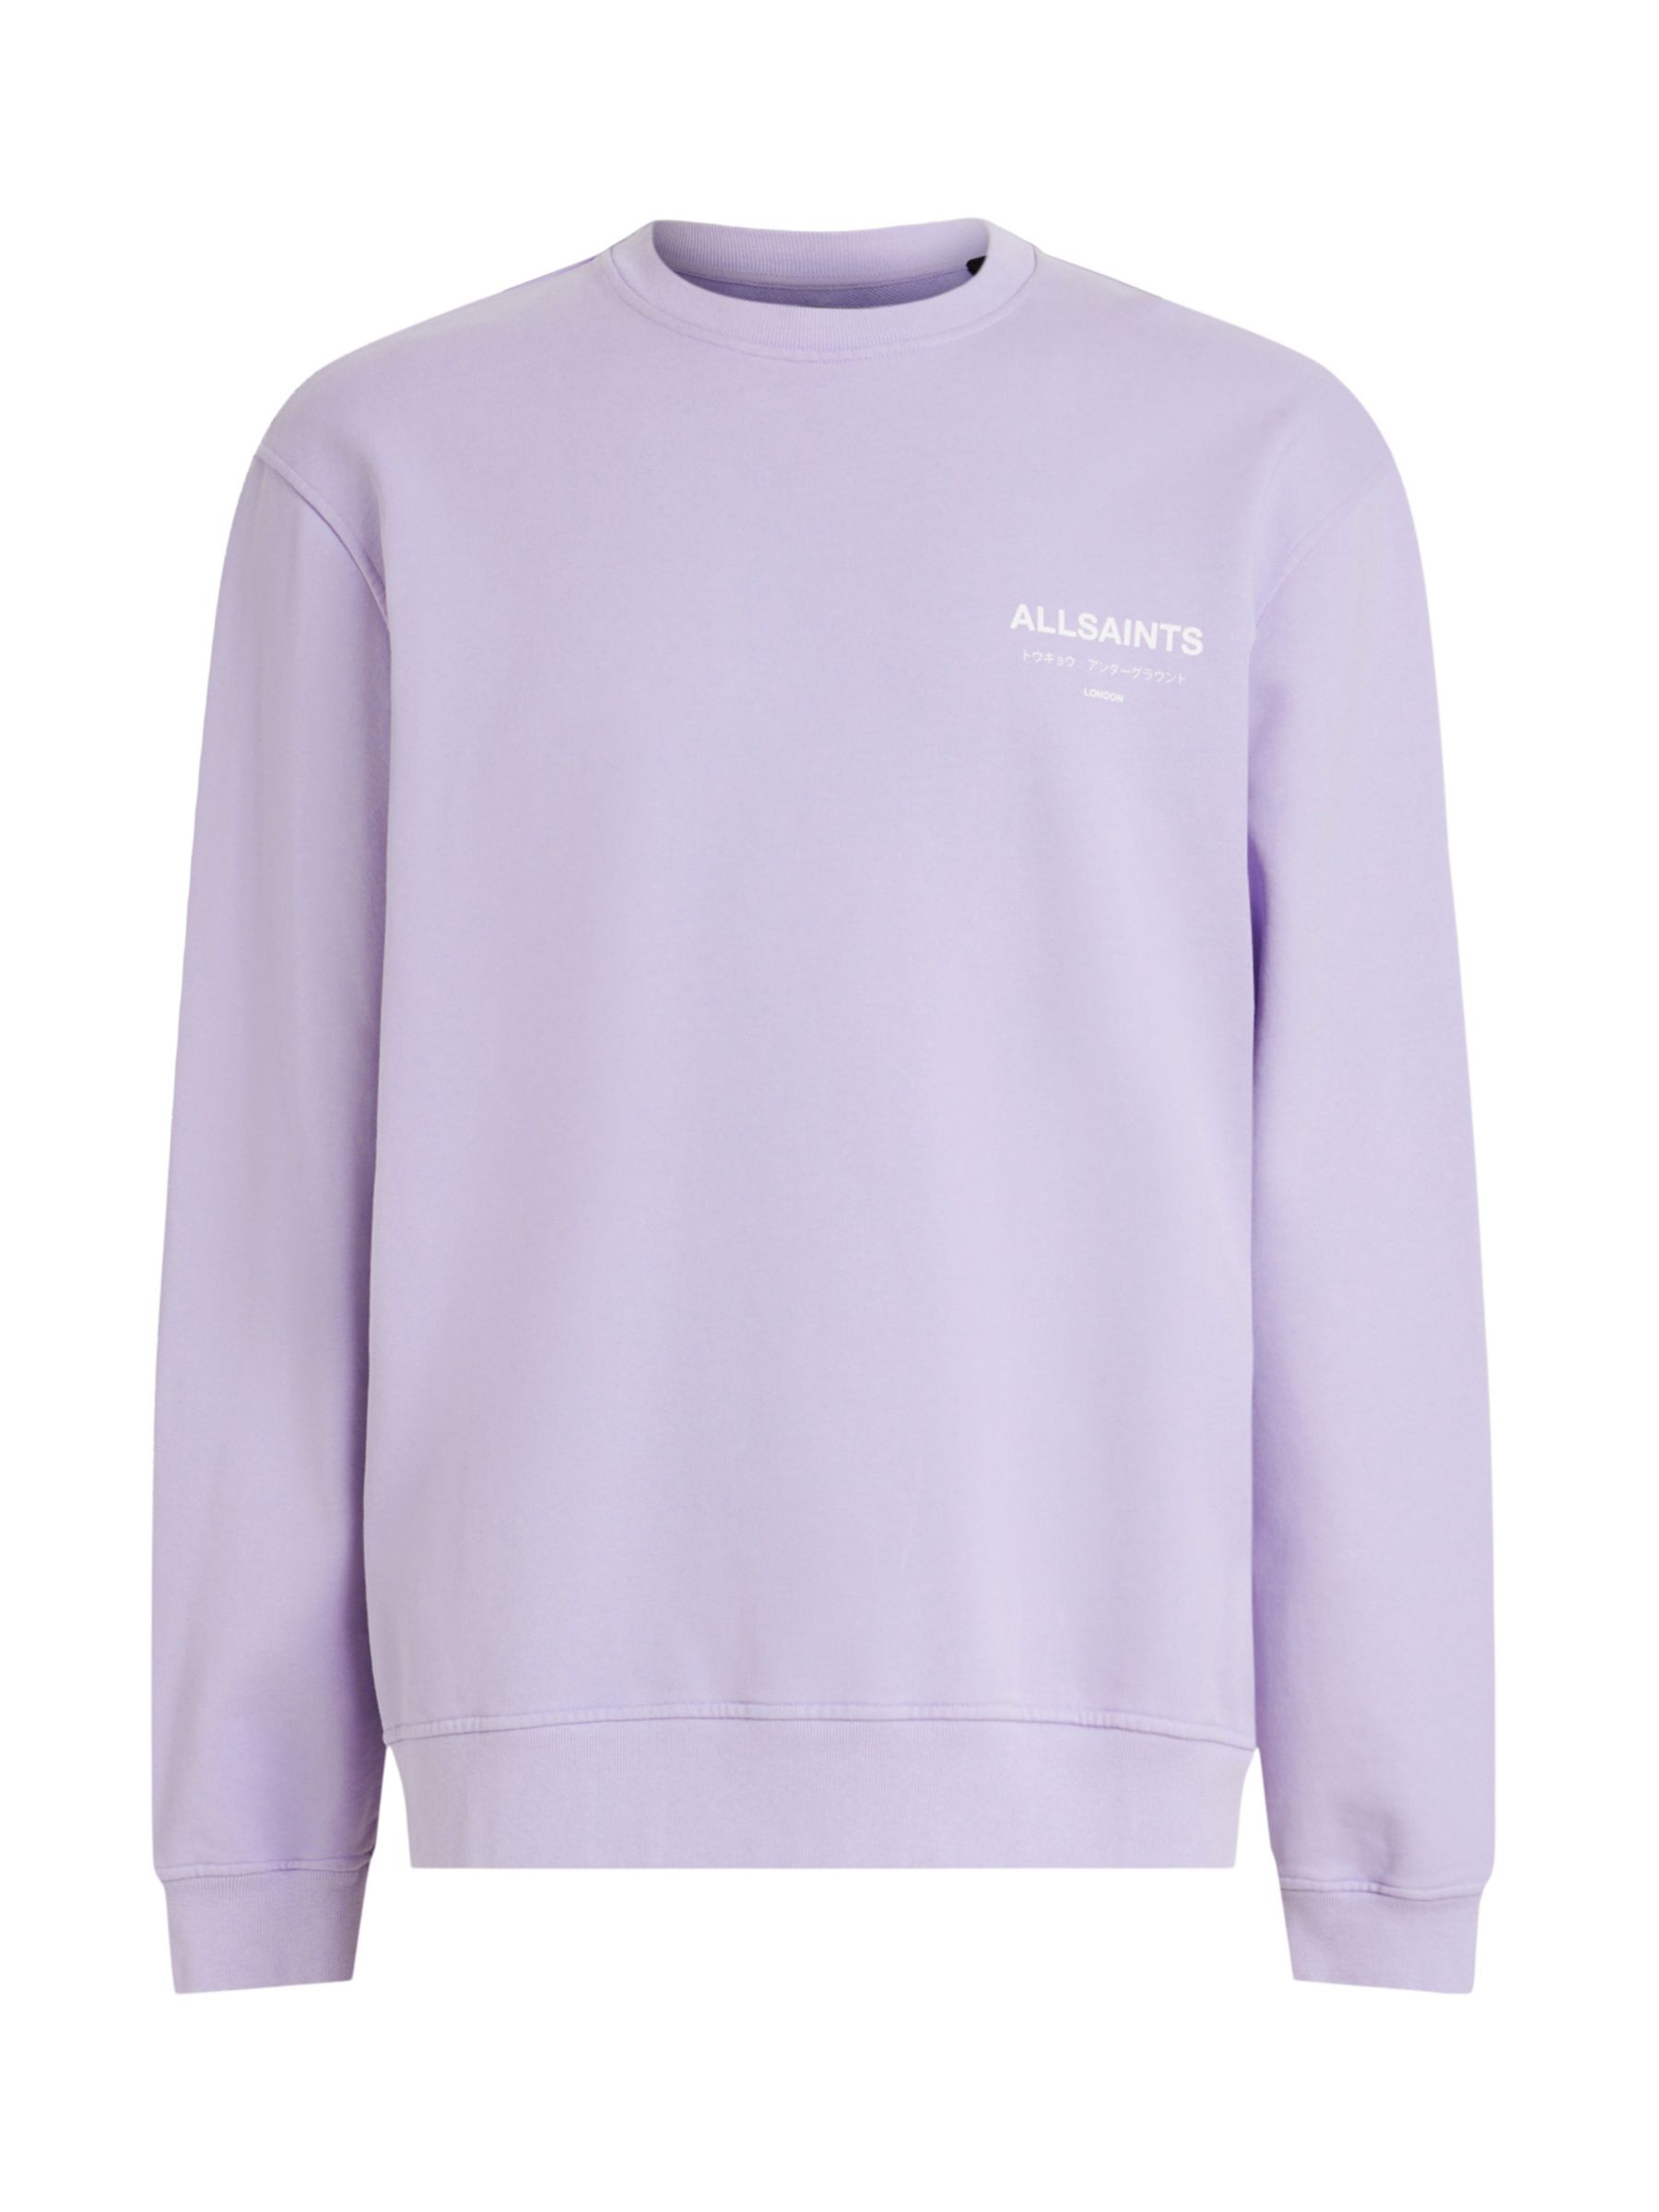 AllSaints Underground Crew Neck Sweatshirt, Lavndr Lilac/White, XL